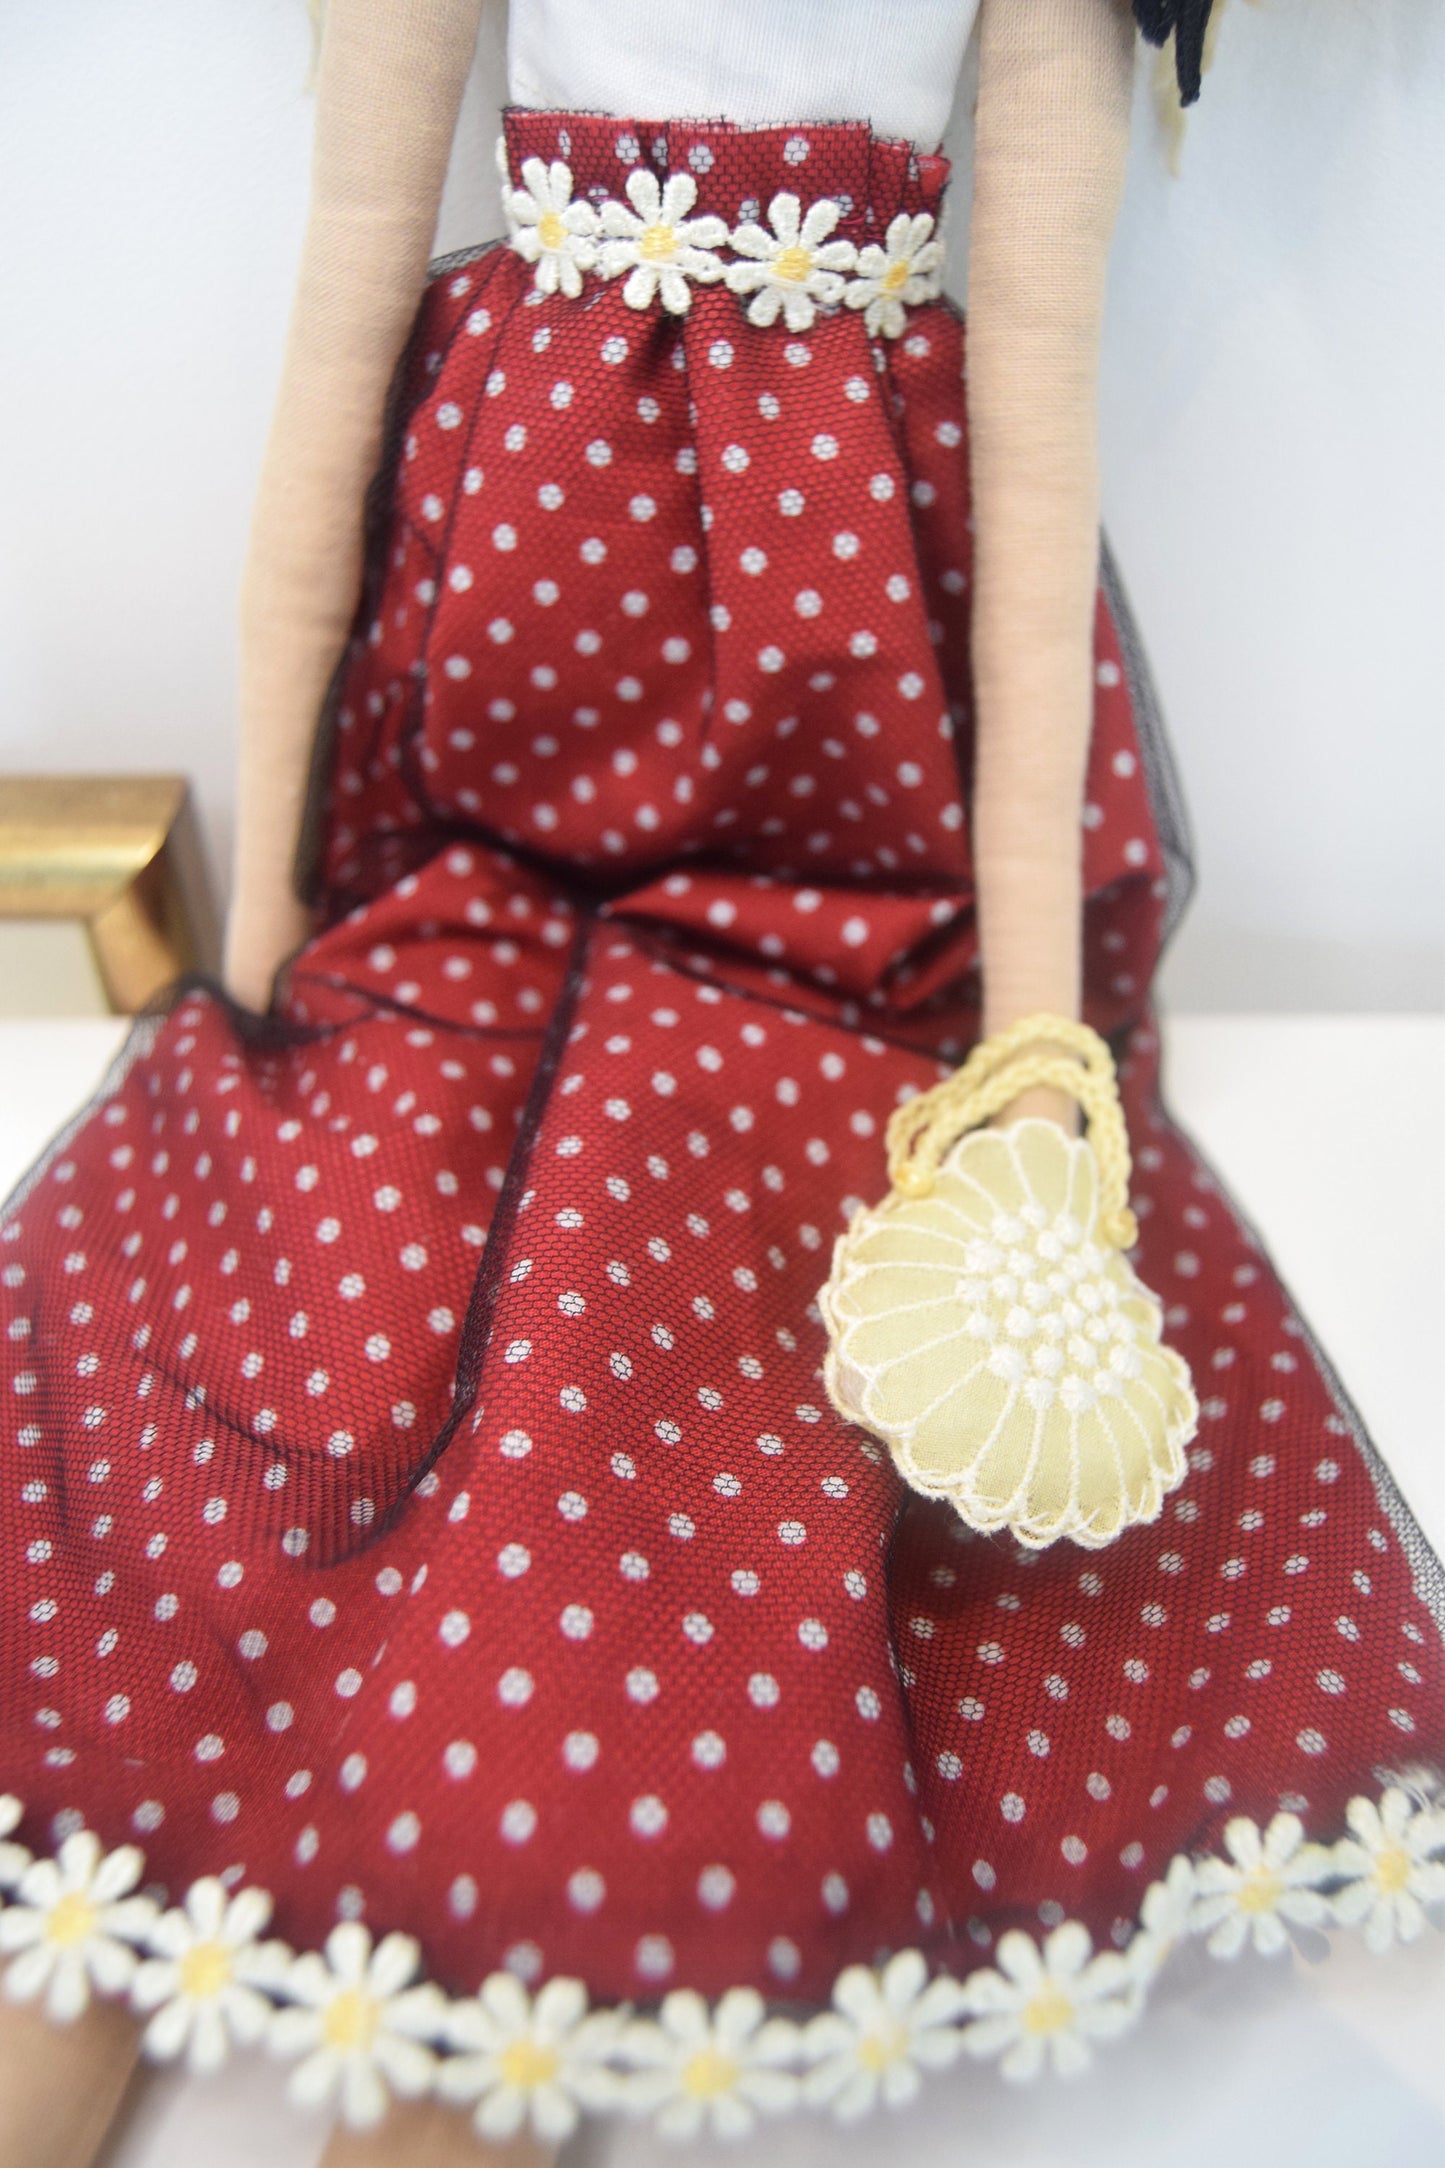 Handmade Fabric Doll - Ms. Daisy